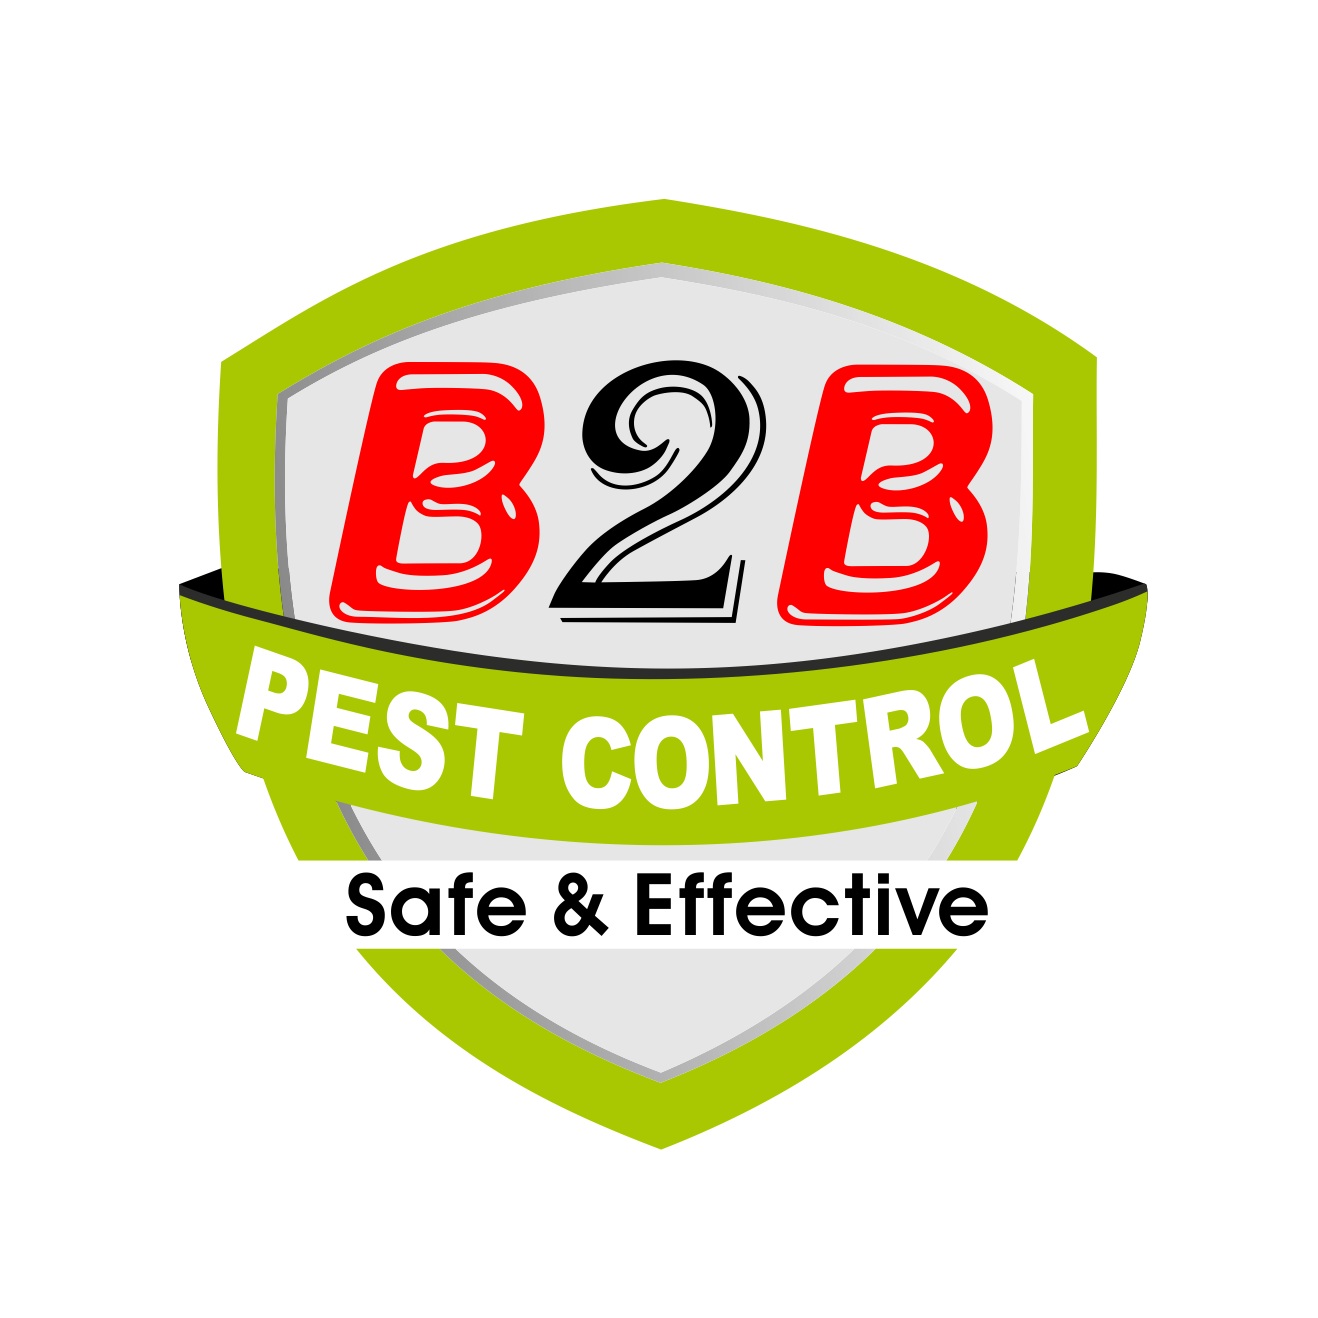 B2B Pest Control